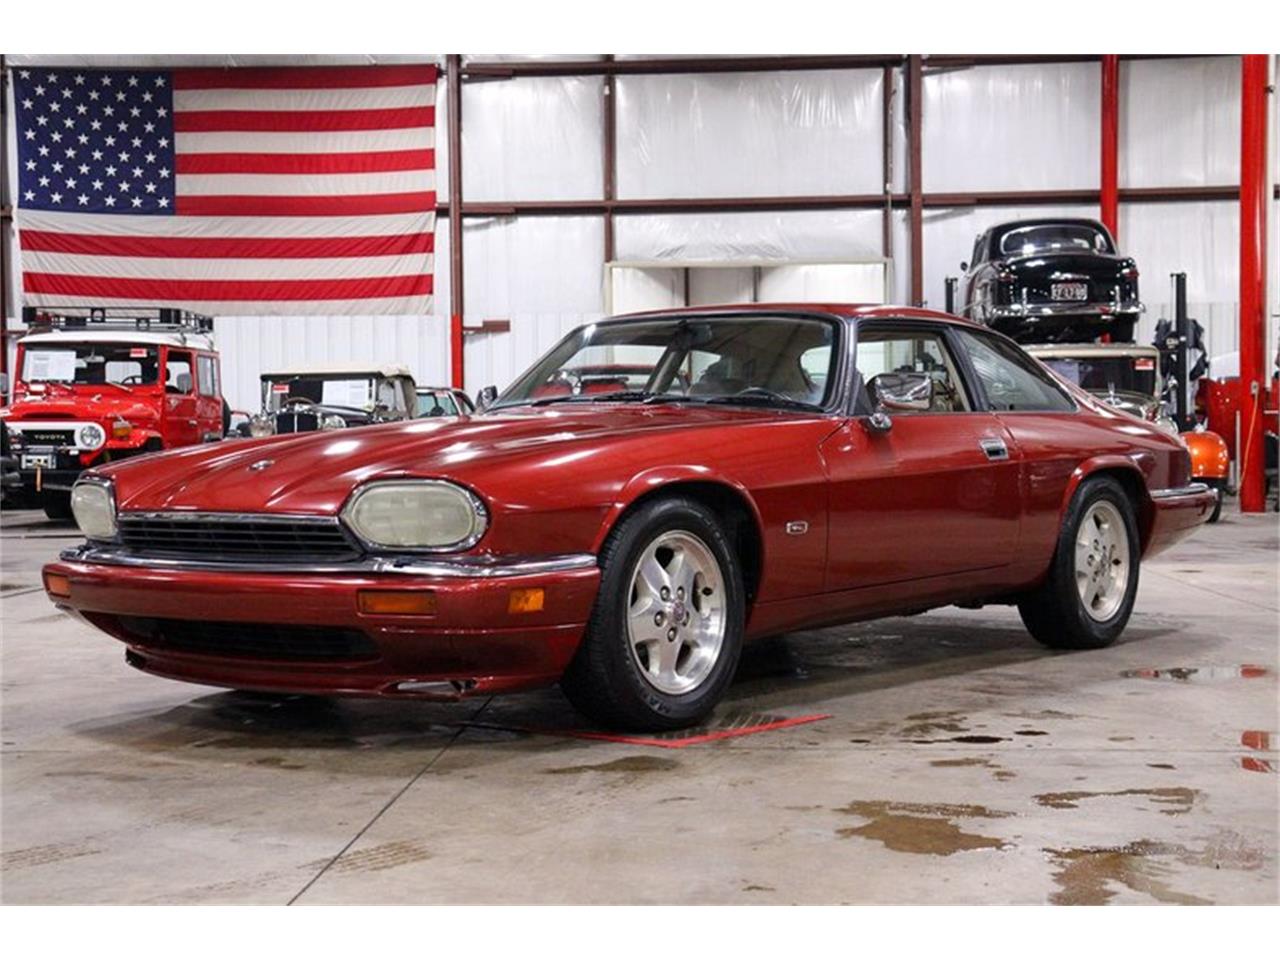 For Sale: 1995 Jaguar XJS in Ken2od, Michigan for sale in Grand Rapids, MI